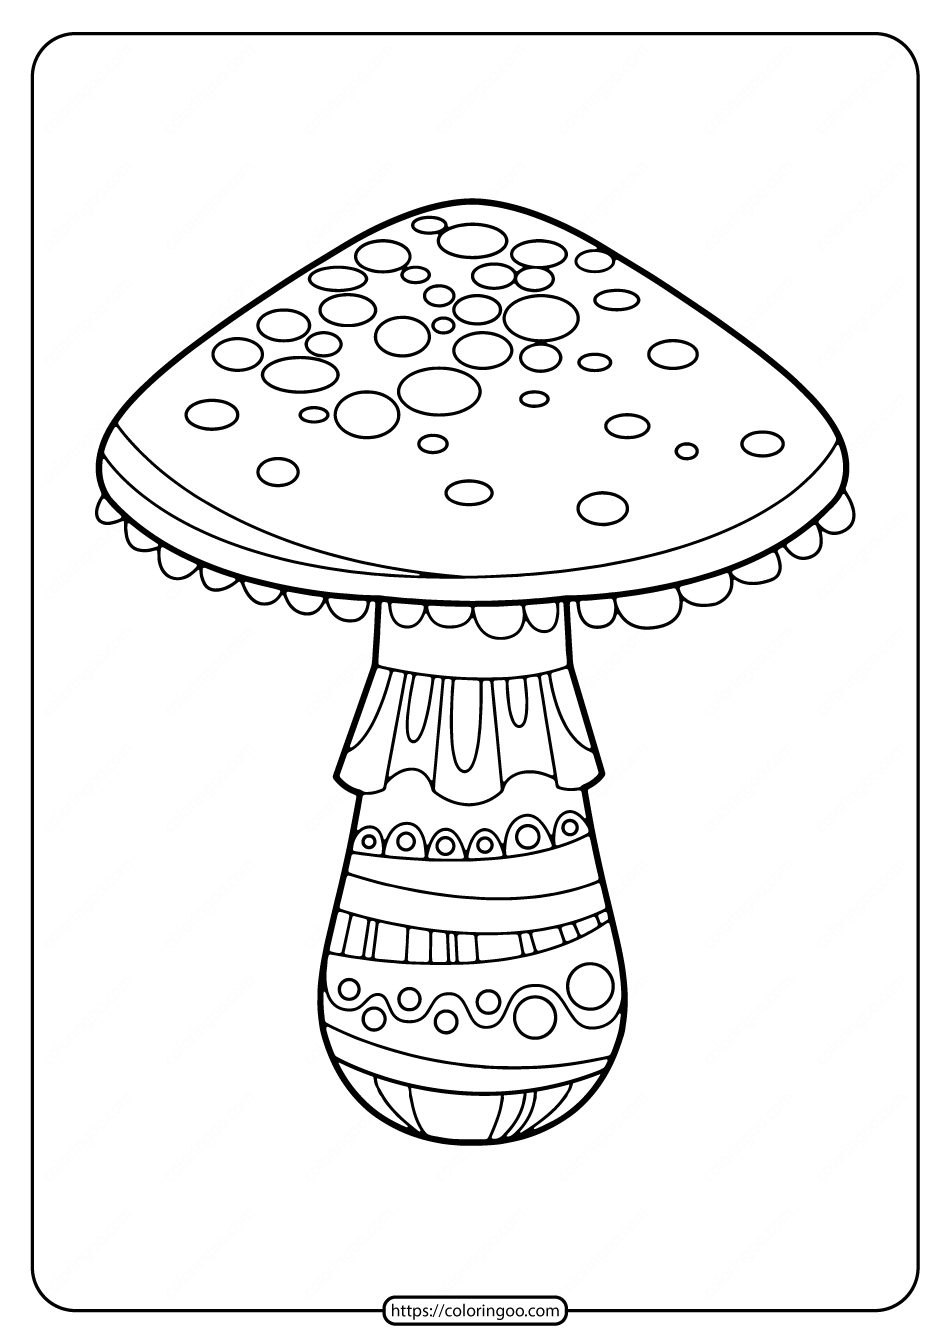 printable mushroom coloring page for kids